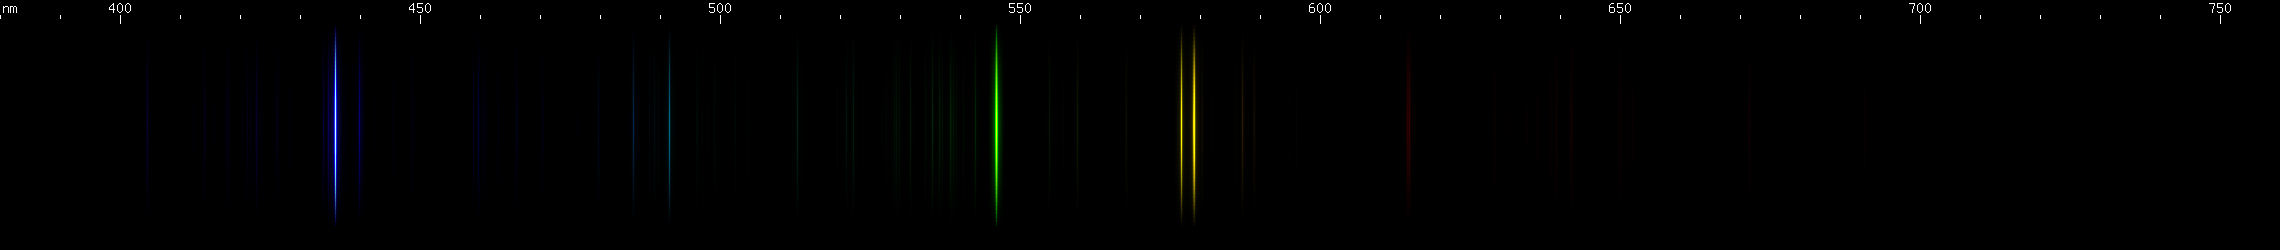 Spectral Lines of Mercury